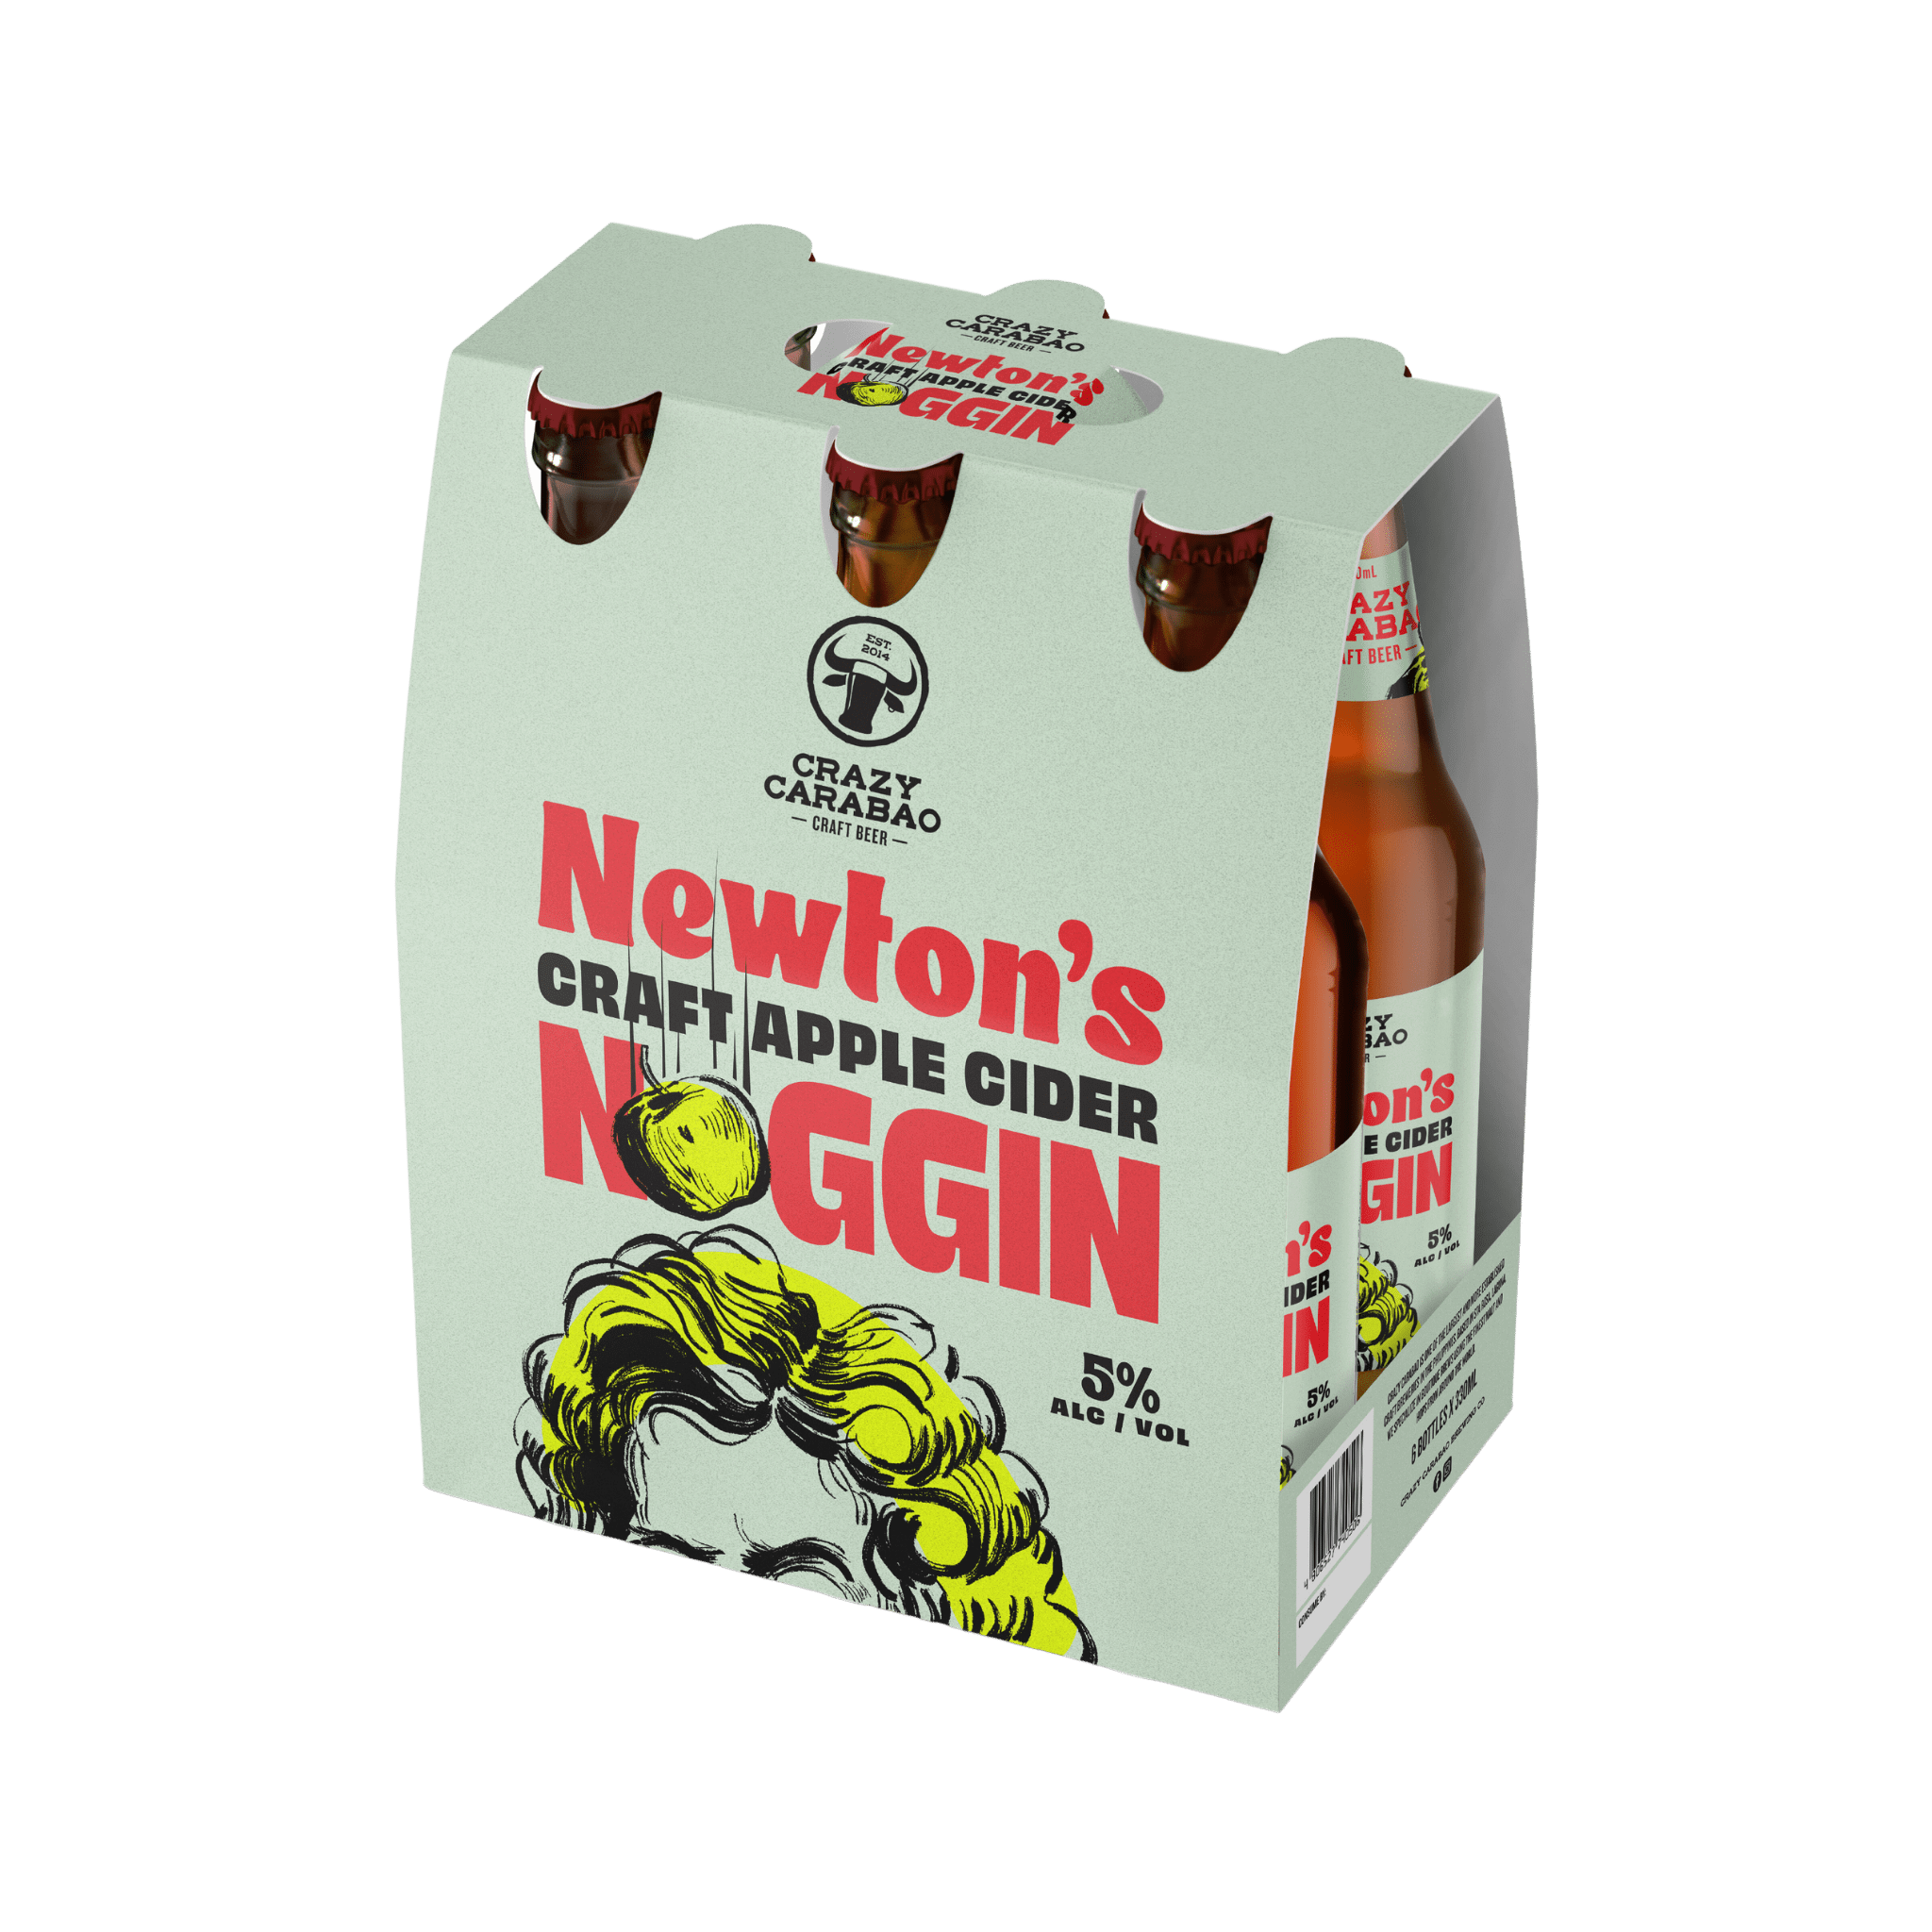 Newton’s Craft Apple Cider Noggin 330ml Bottle 6-Pack